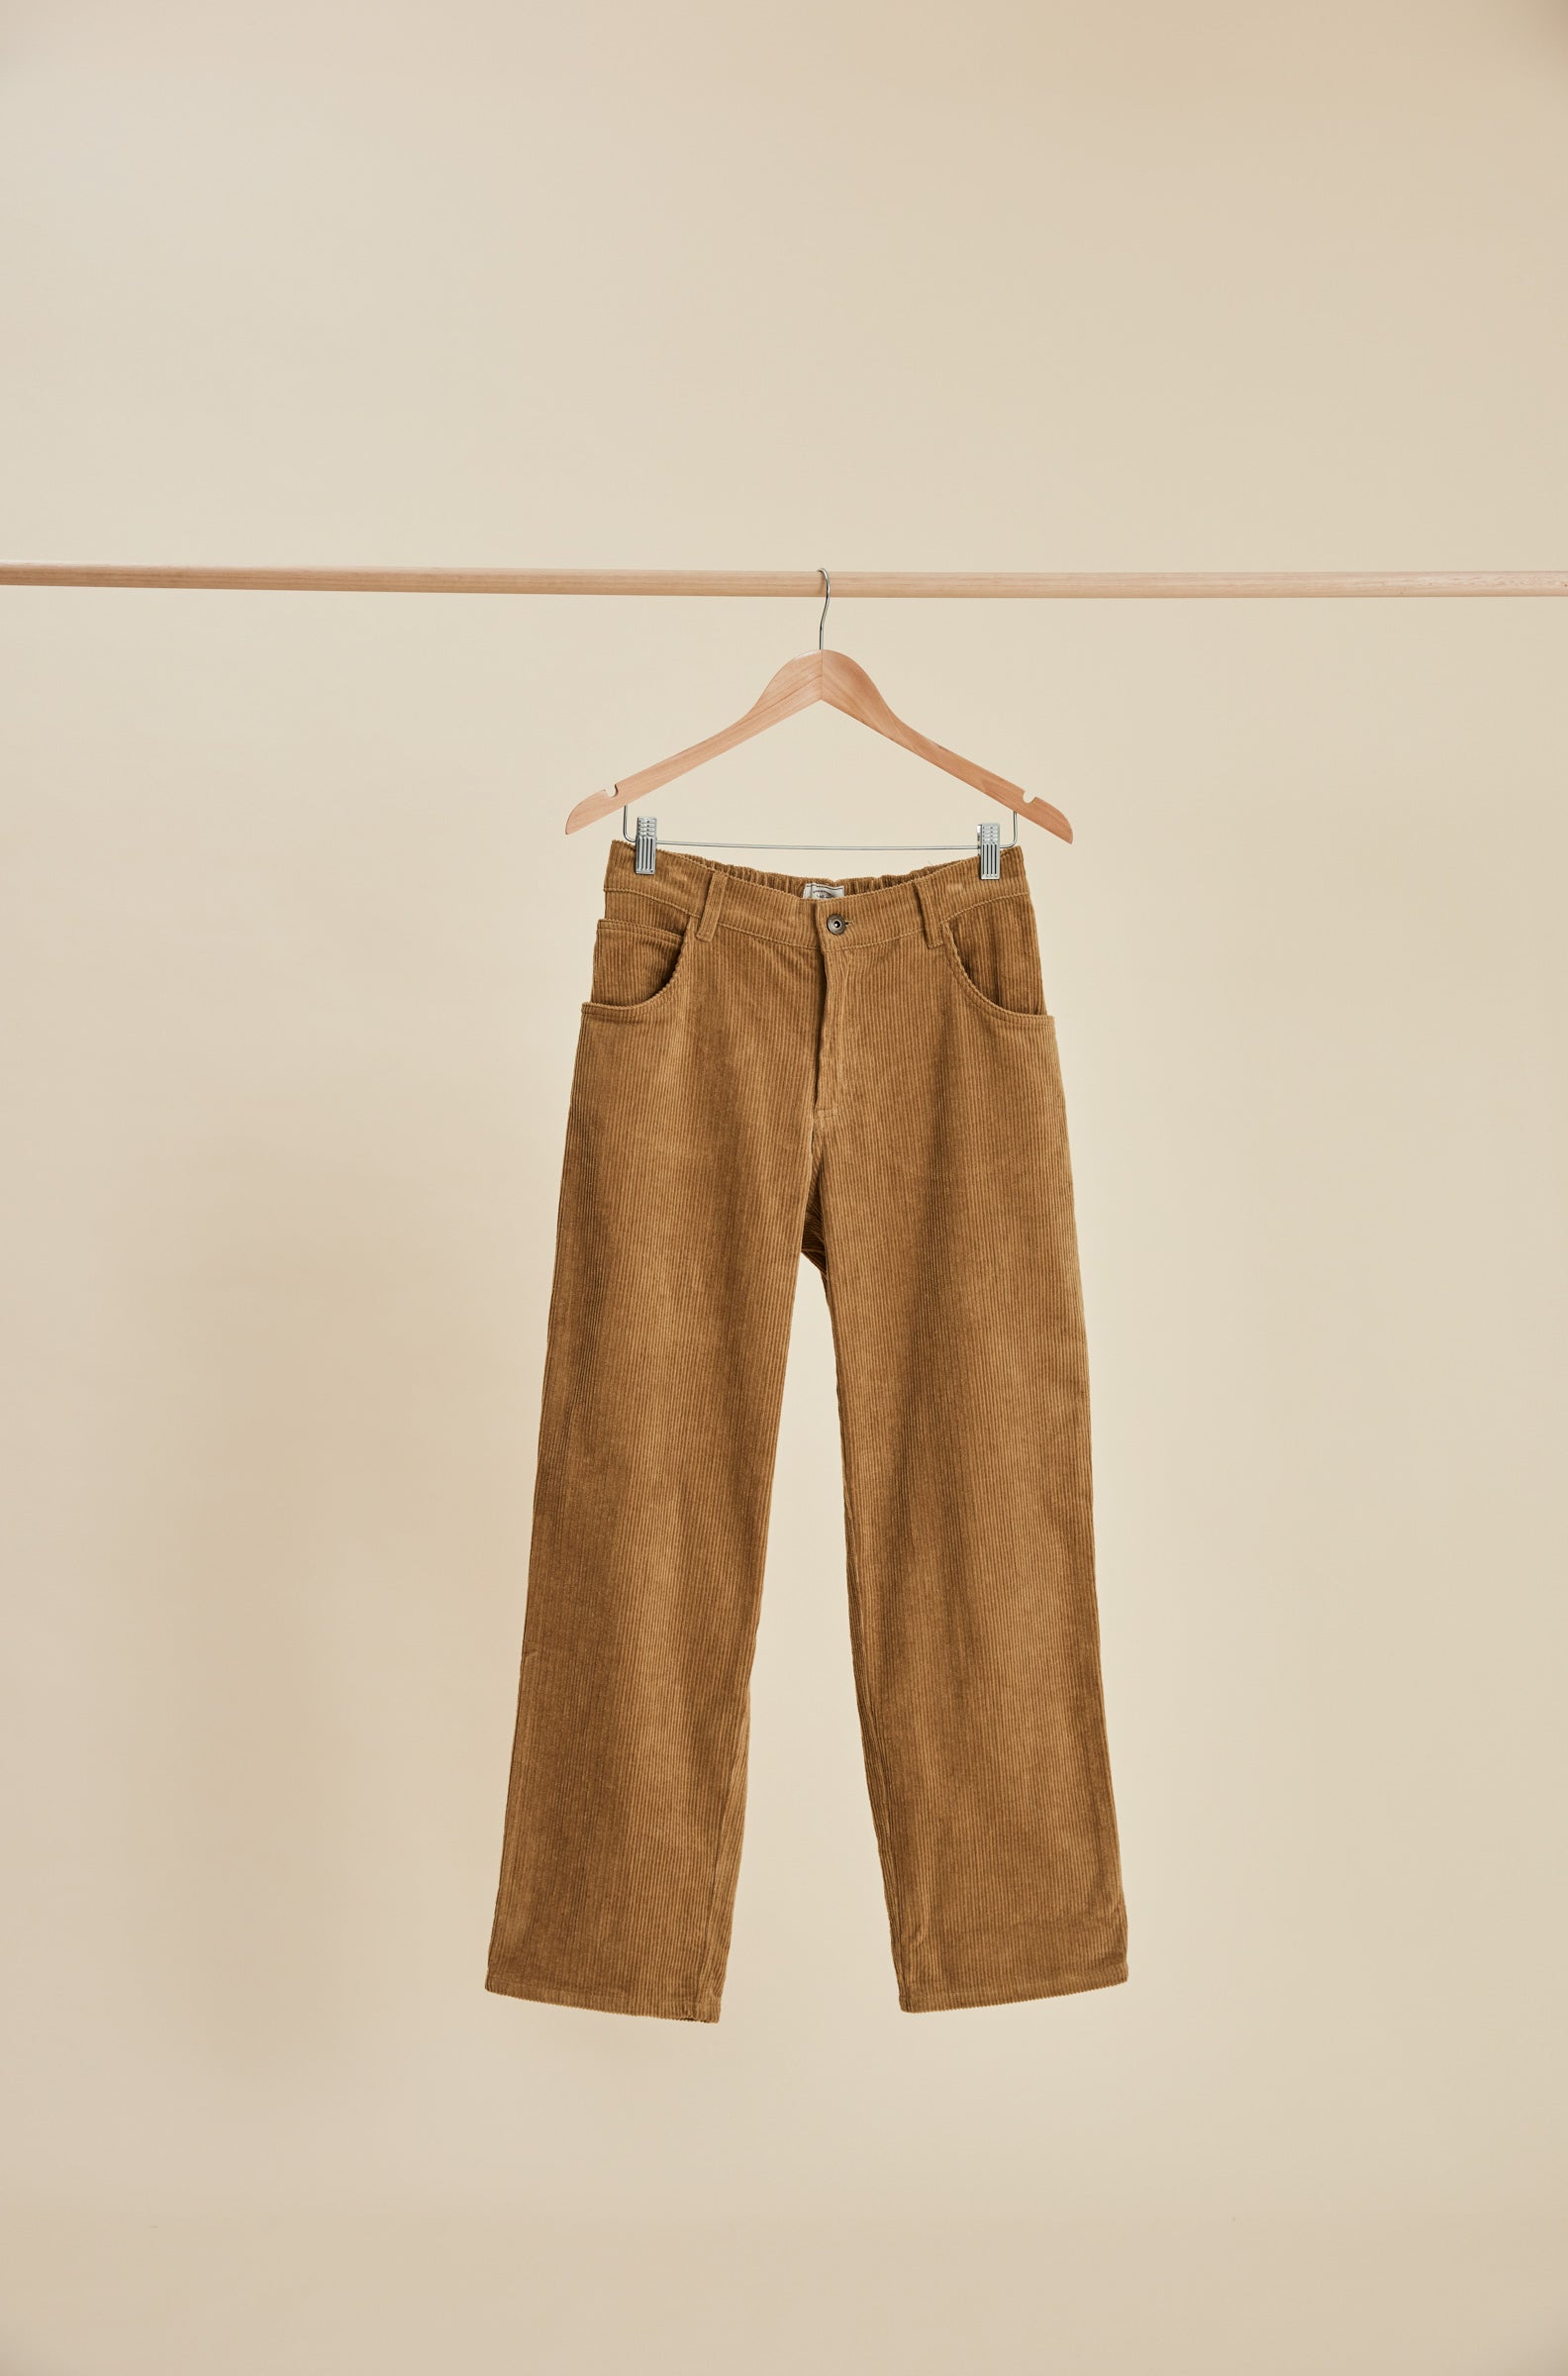 Dayton - Unisex Brown Cord Pants